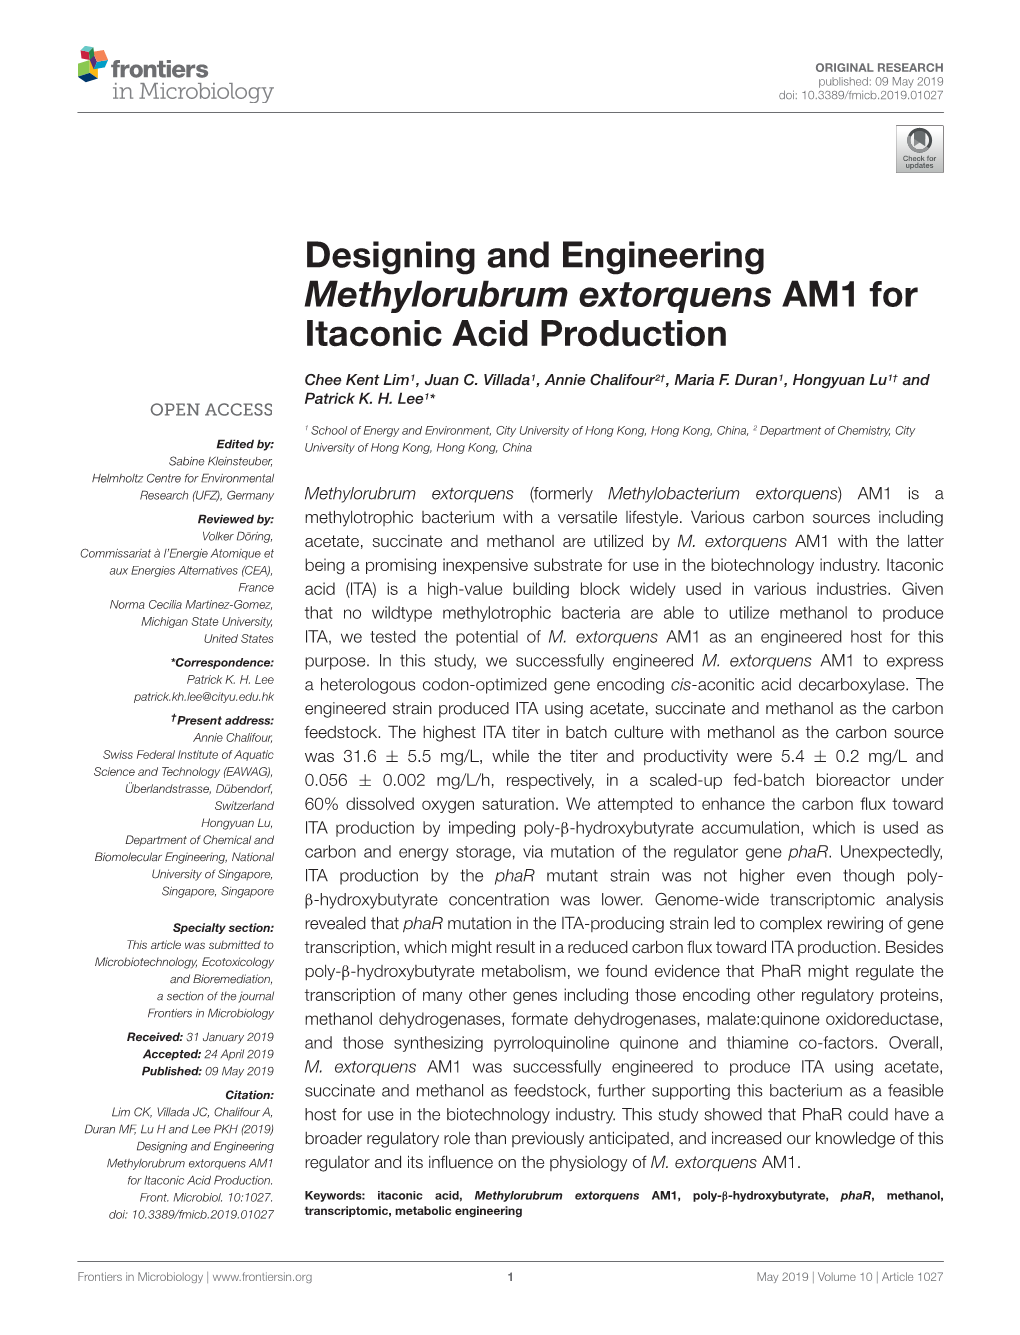 Designing and Engineering Methylorubrum Extorquens AM1 for Itaconic Acid Production